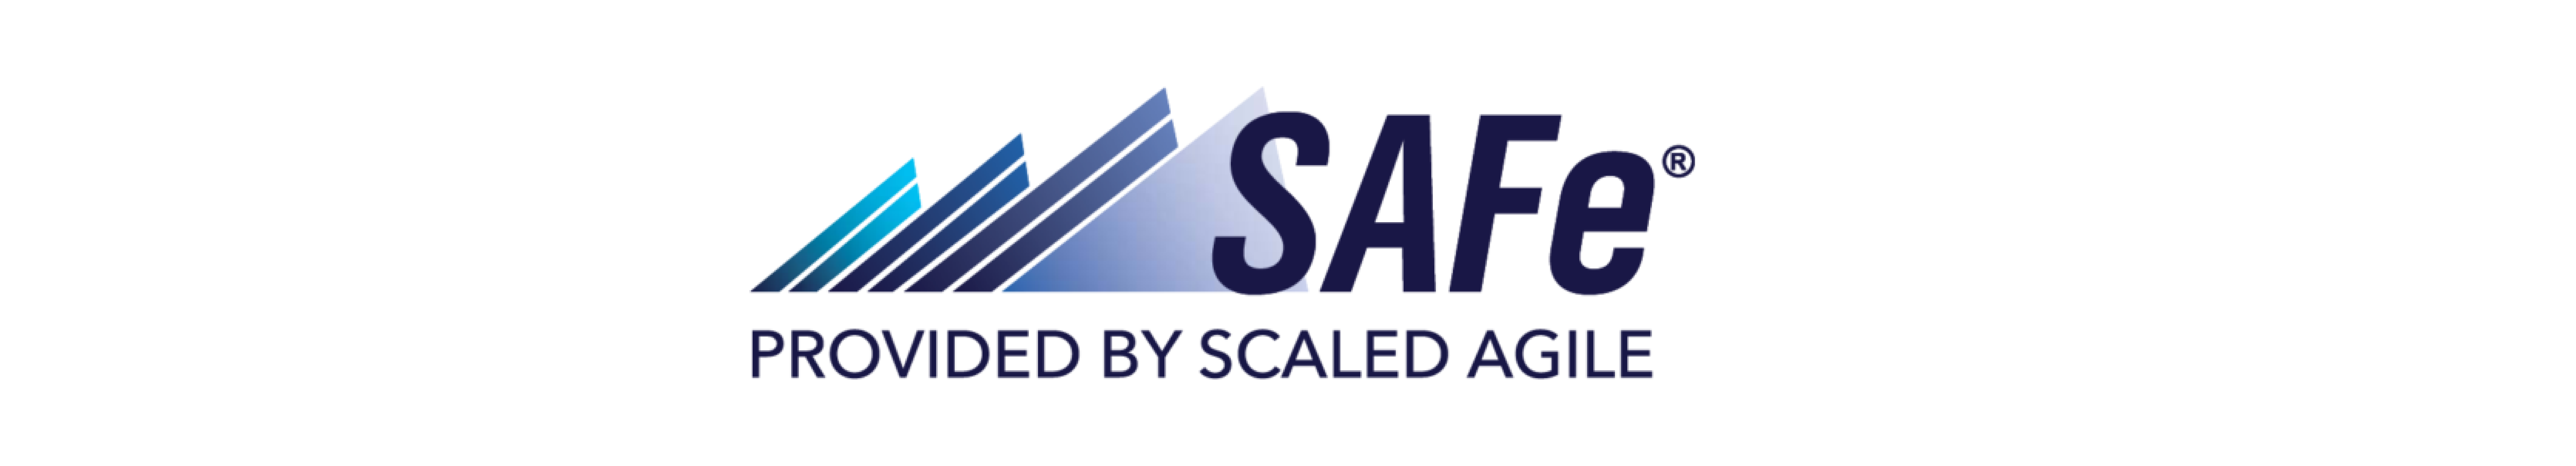 SAFe-logo_rgb-1